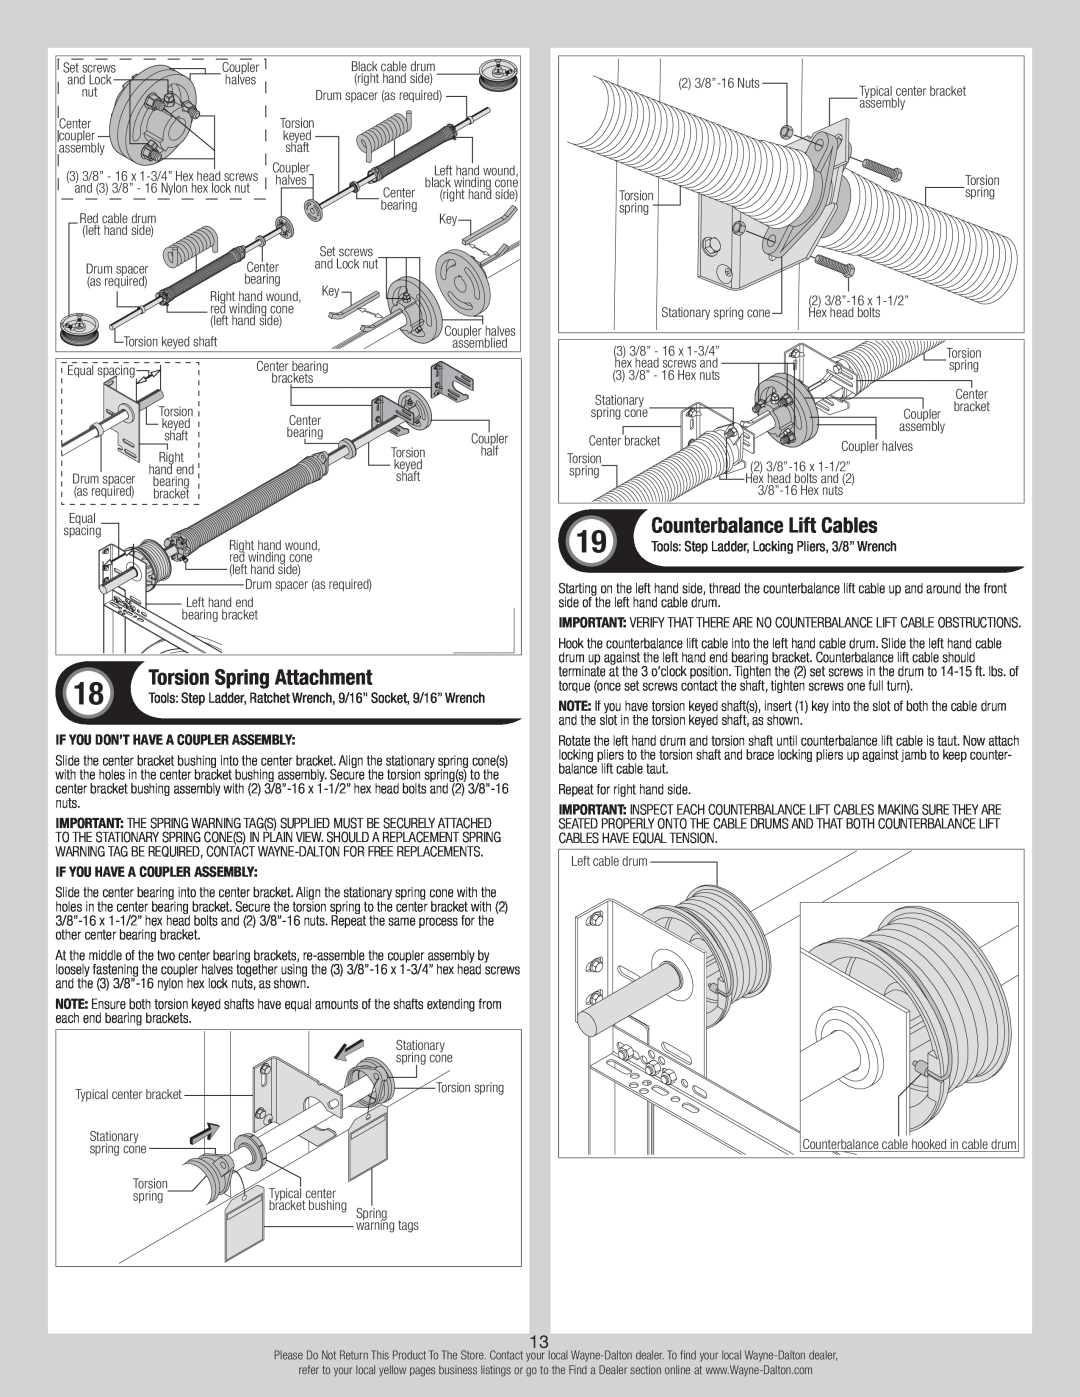 Wayne-Dalton 7100 Series installation instructions Torsion Spring Attachment, Counterbalance Lift Cables 